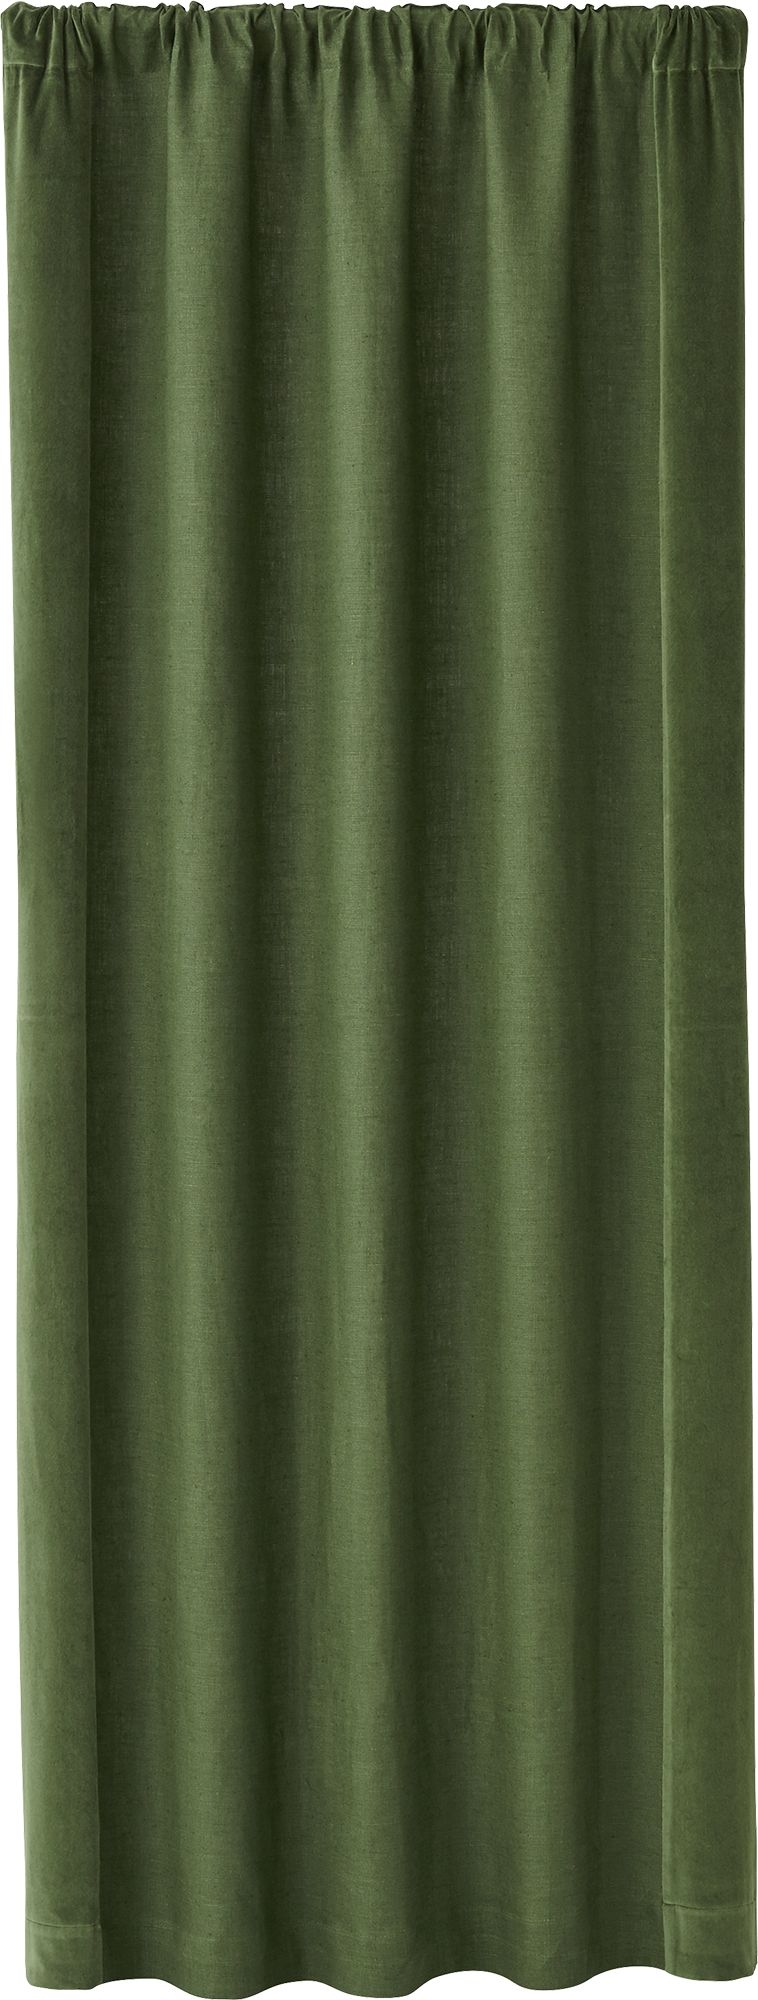 Ezria Green Linen Curtain Panel 48"x108" - Image 3